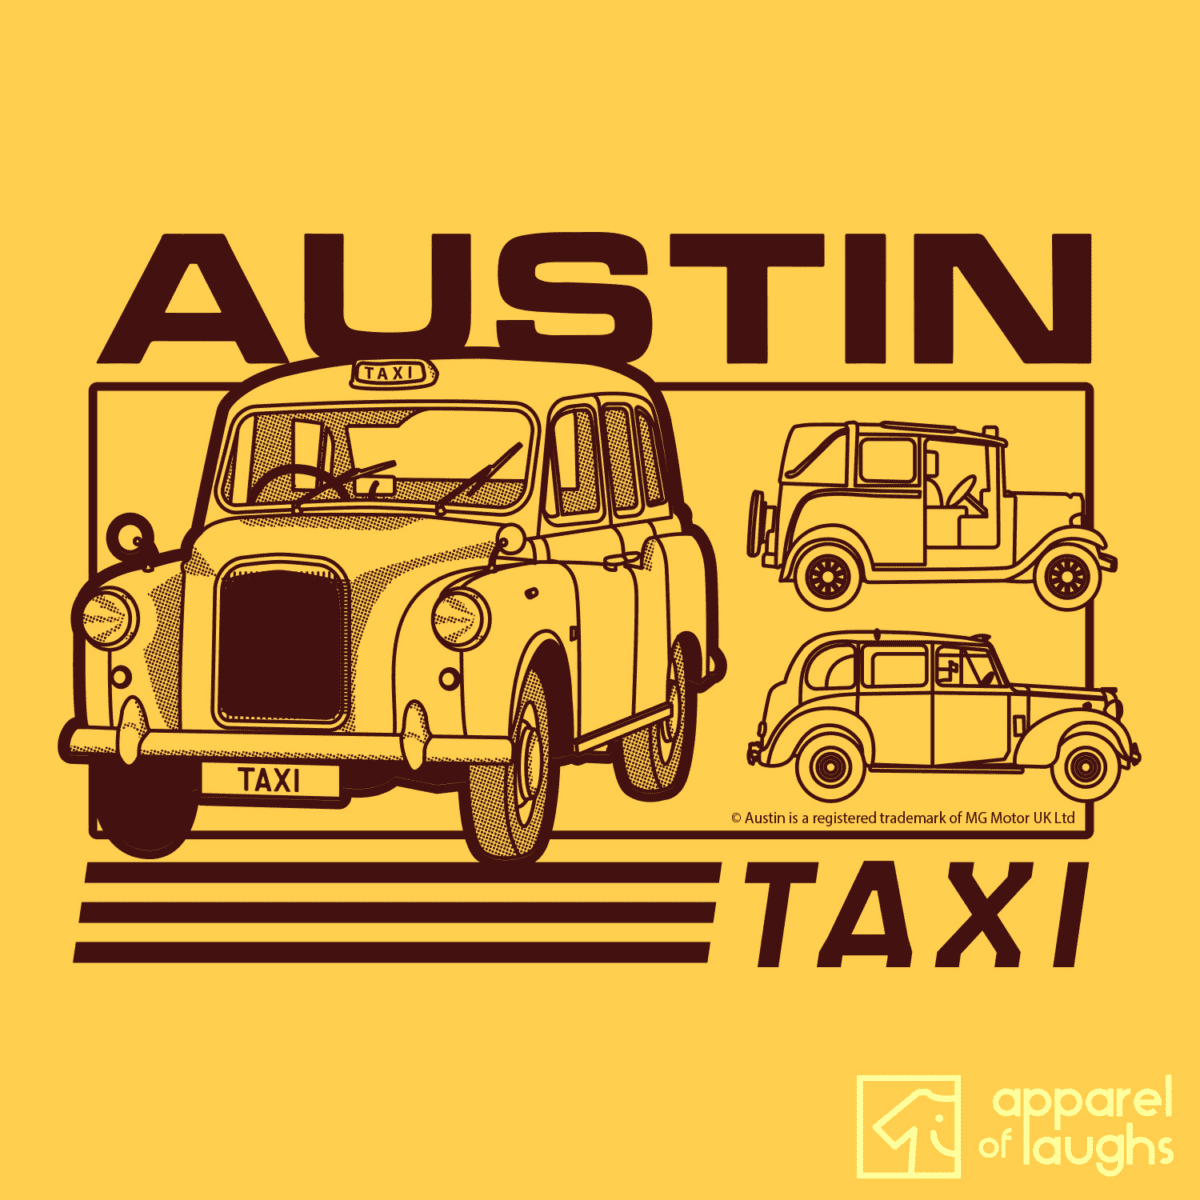 Austin Taxi London Car Brand Vintage Retro British Motoring Leyland Heritage T-Shirt Design Daisy